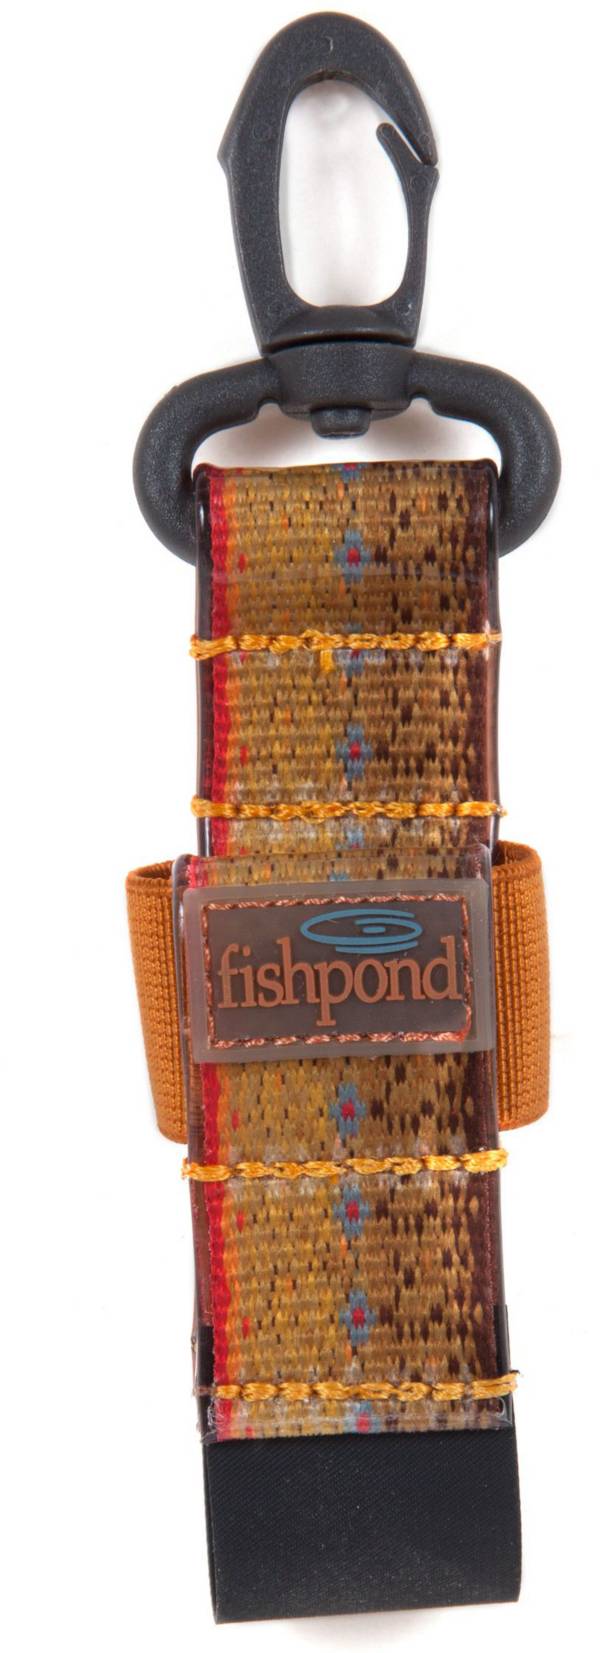 fishpond Dry Shake Bottle Holder product image